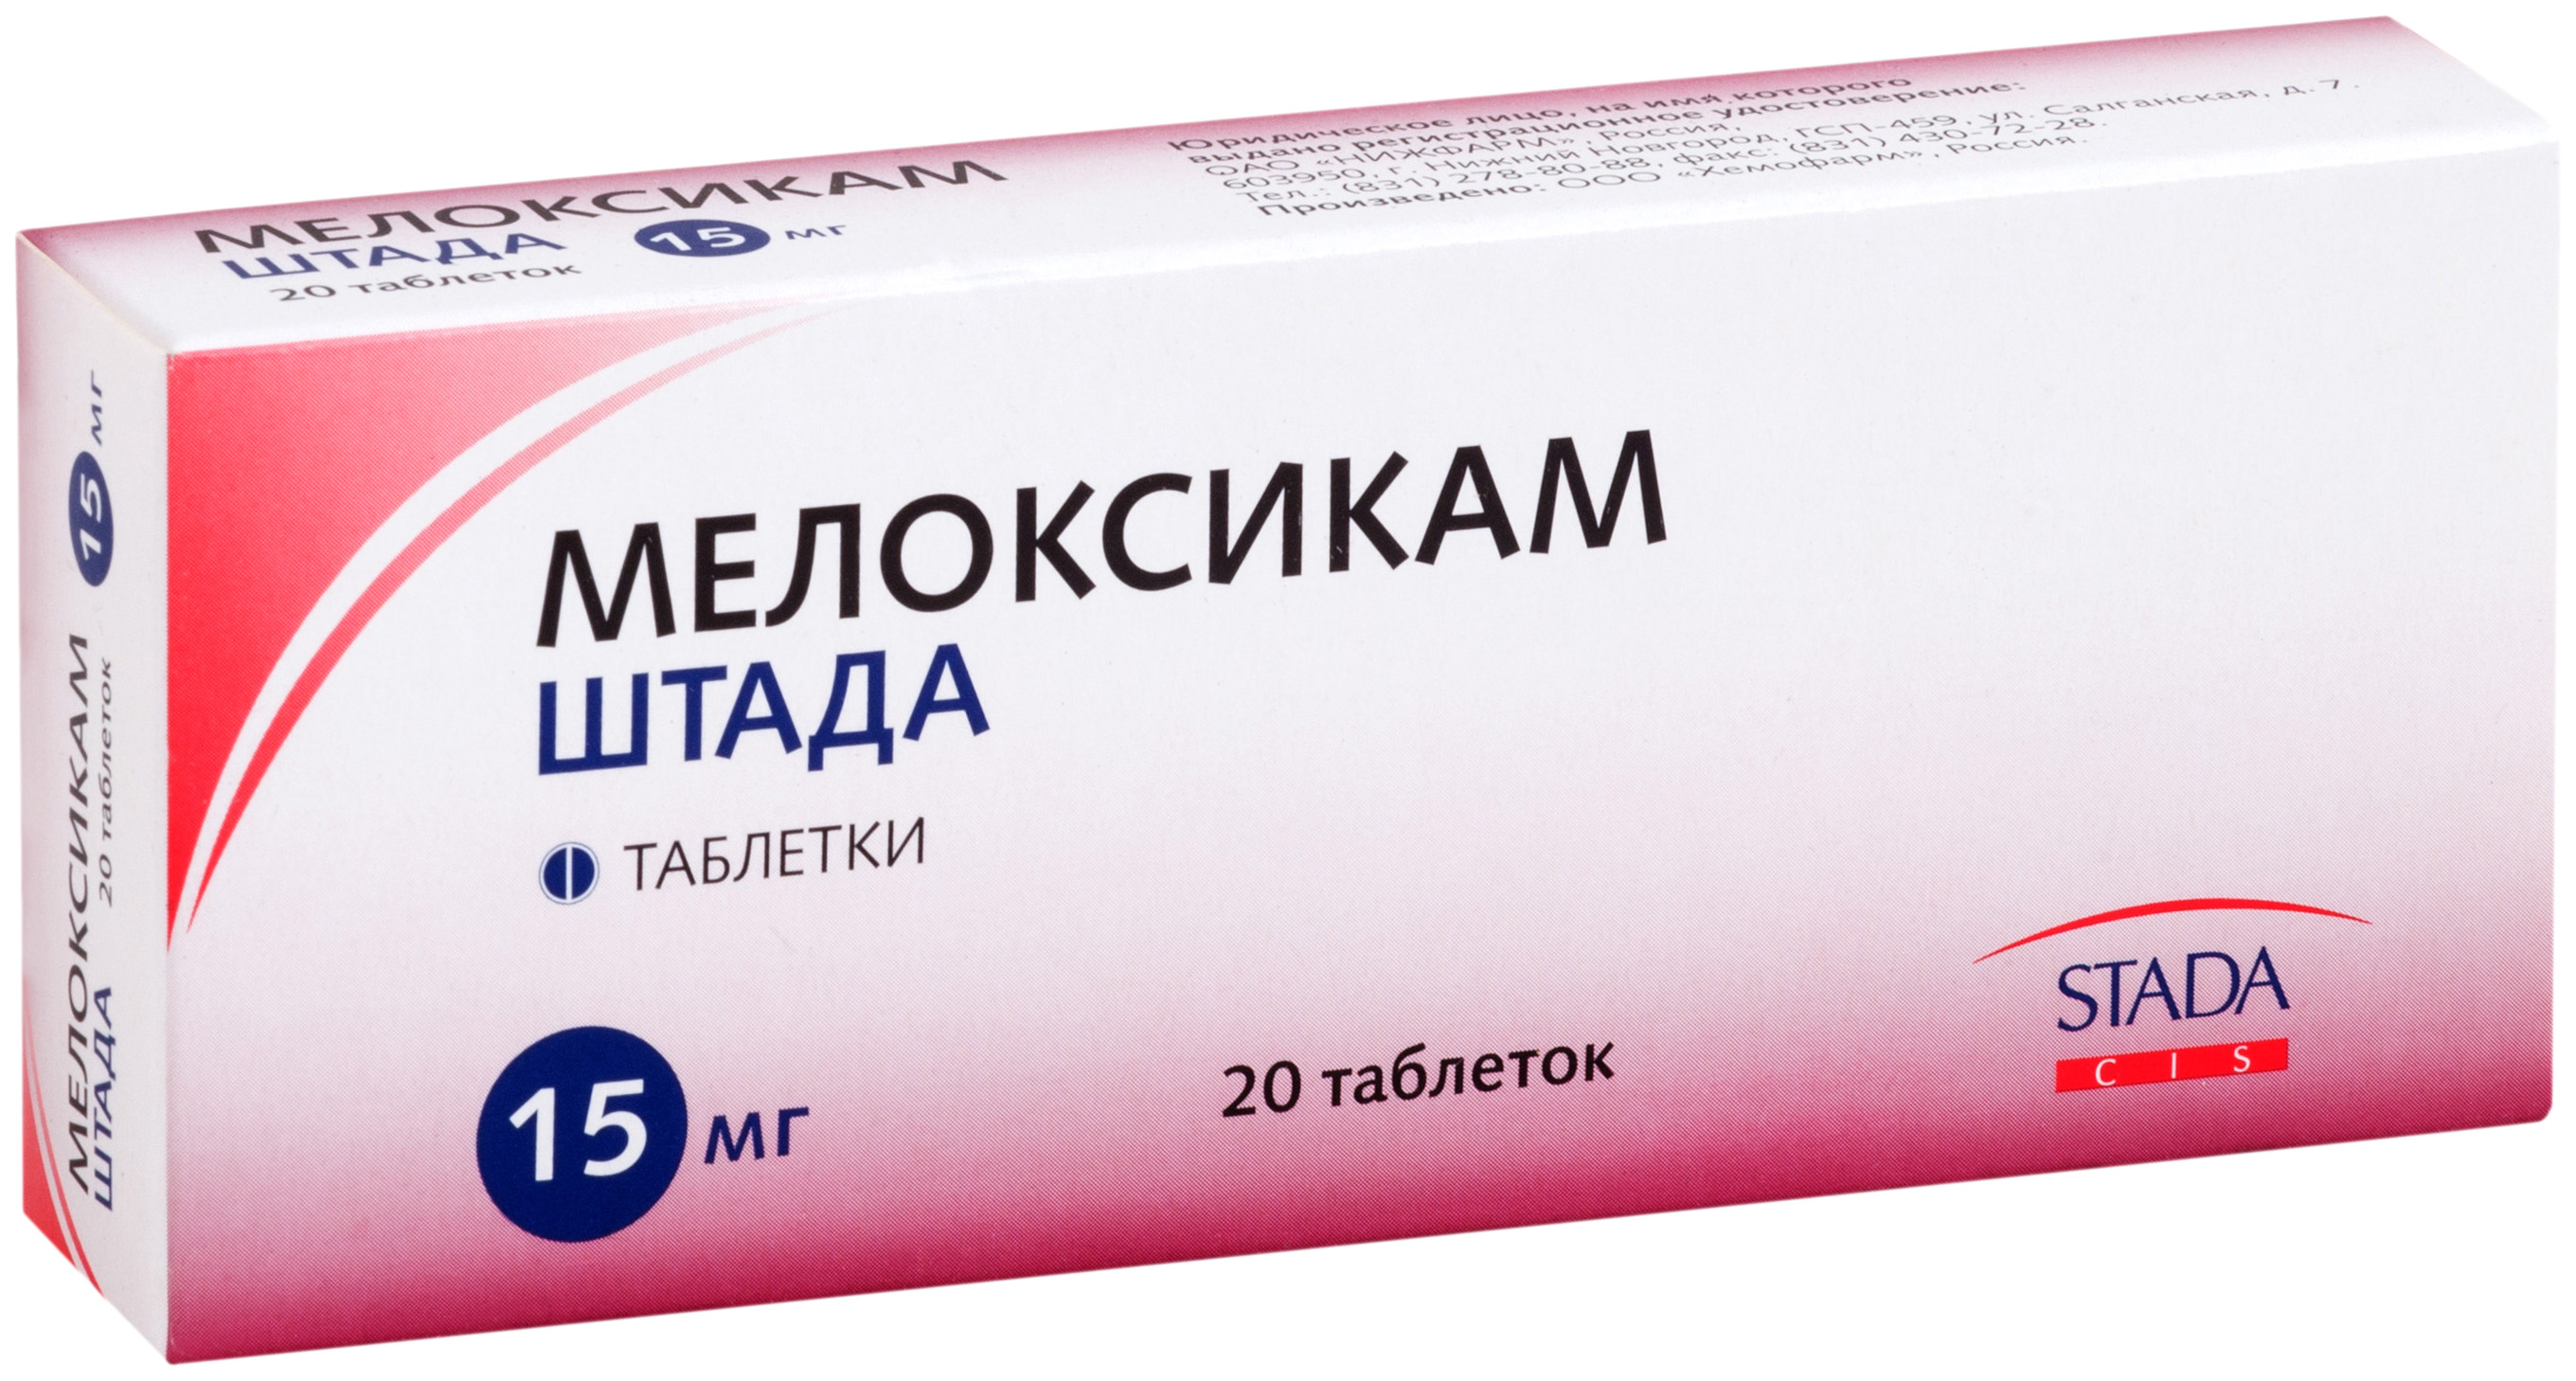 Купить Мелоксикам-Штада 15 мг таблетки 20 шт., Нижфарм, Россия